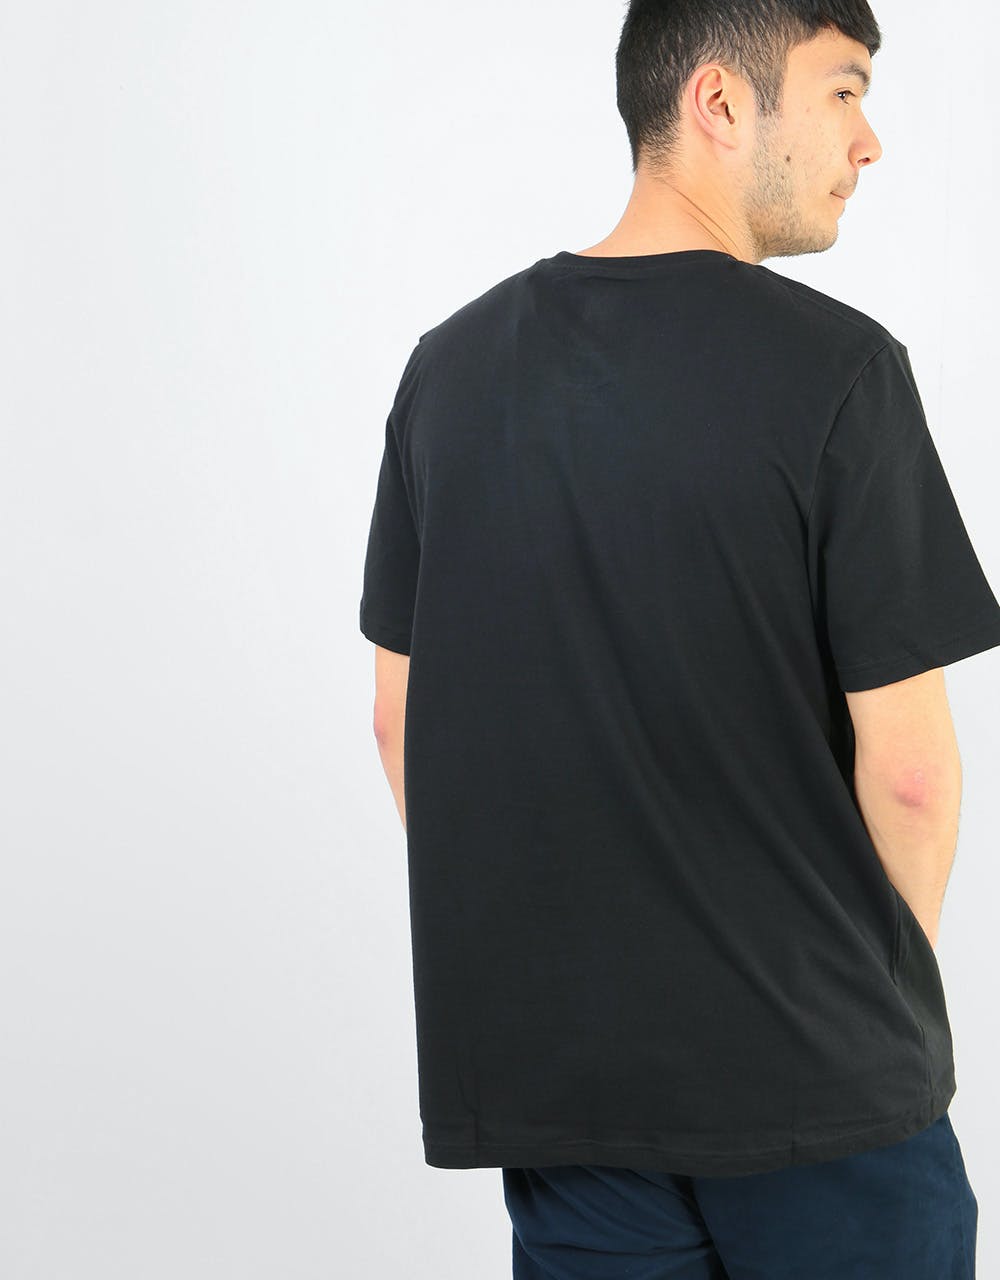 Adidas x Beavis & Butt-Head BB T-Shirt - Black/Multicolor